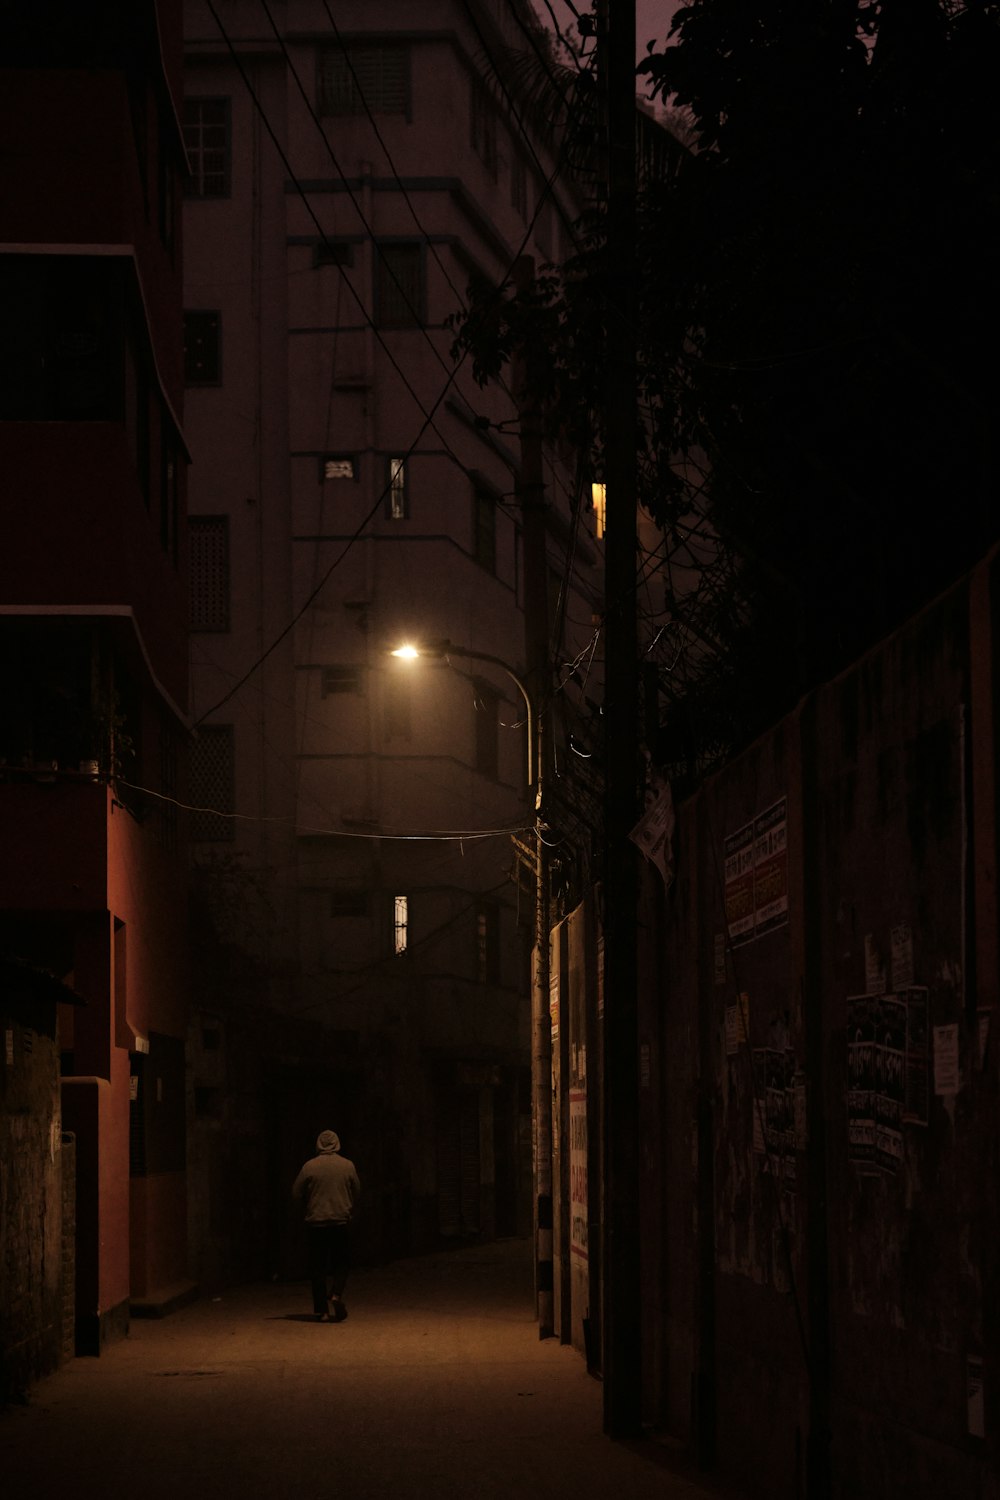 a person walking down a dark alley way at night